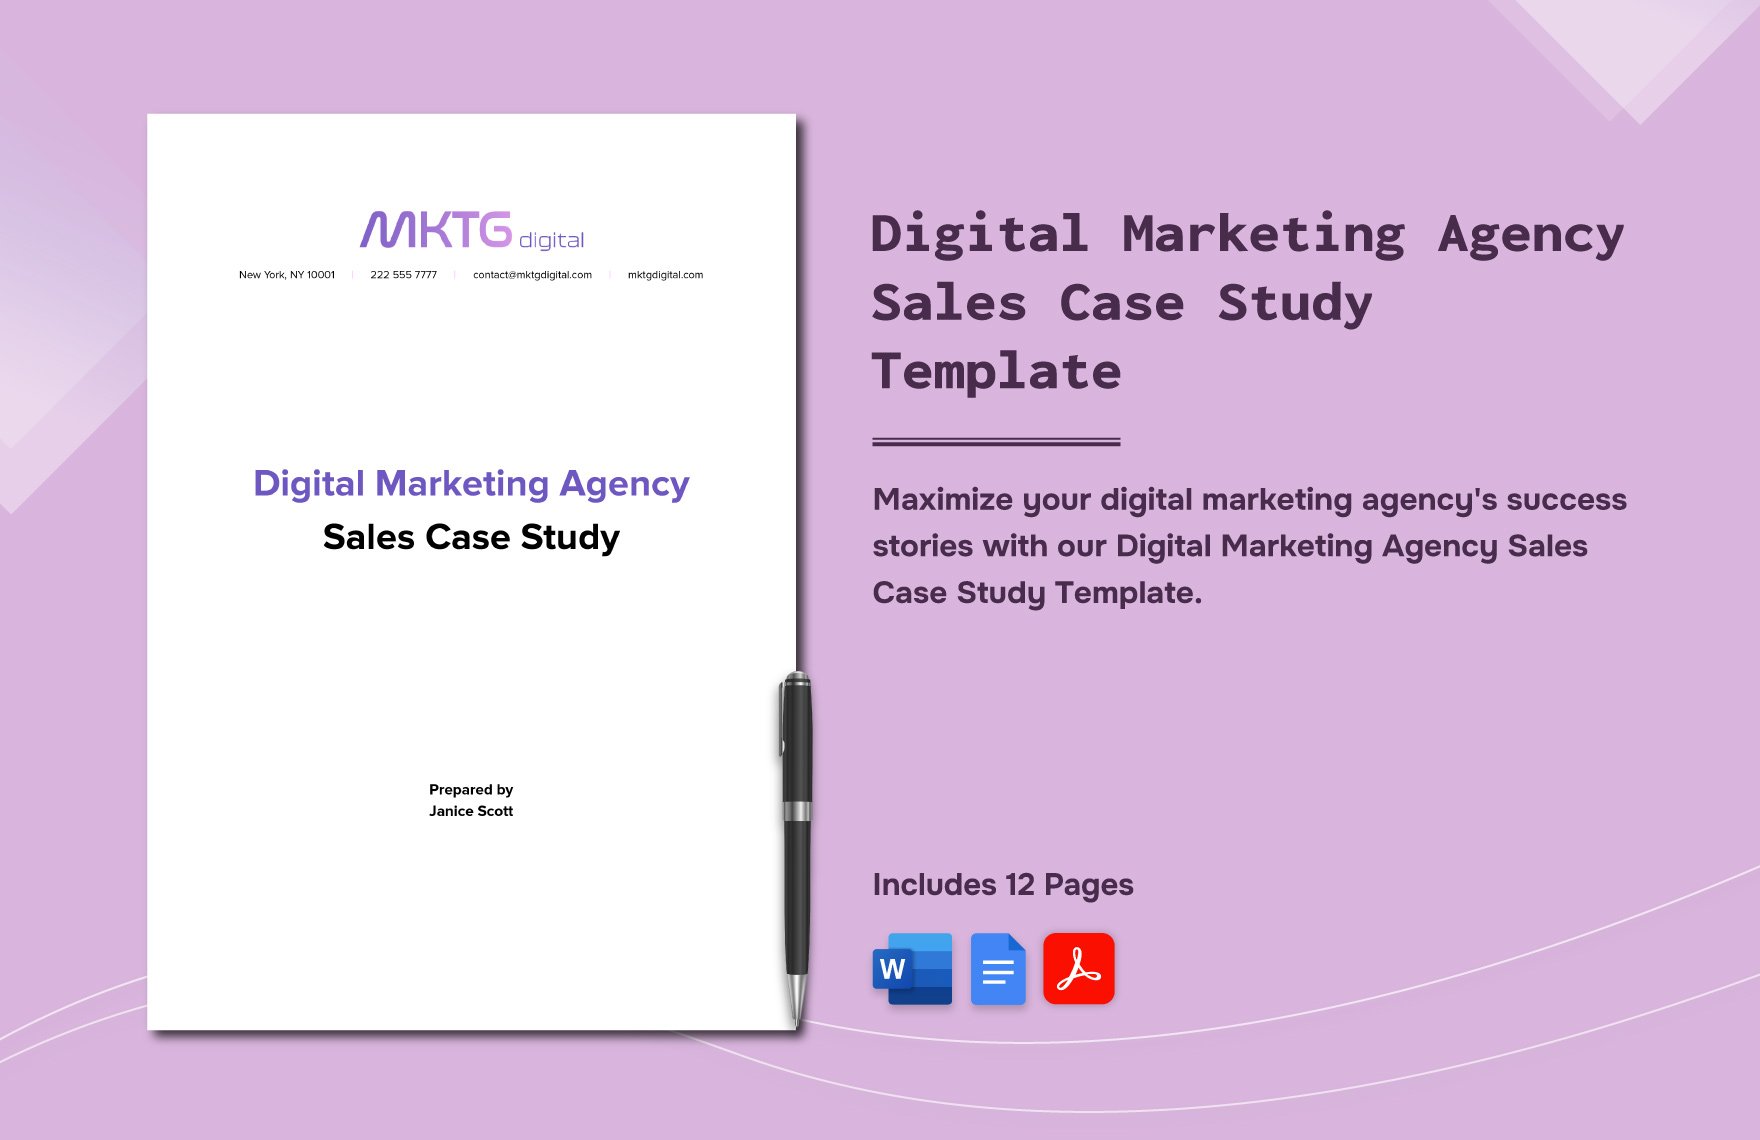 Digital Marketing Agency Sales Case Study Template in Word, Google Docs, PDF